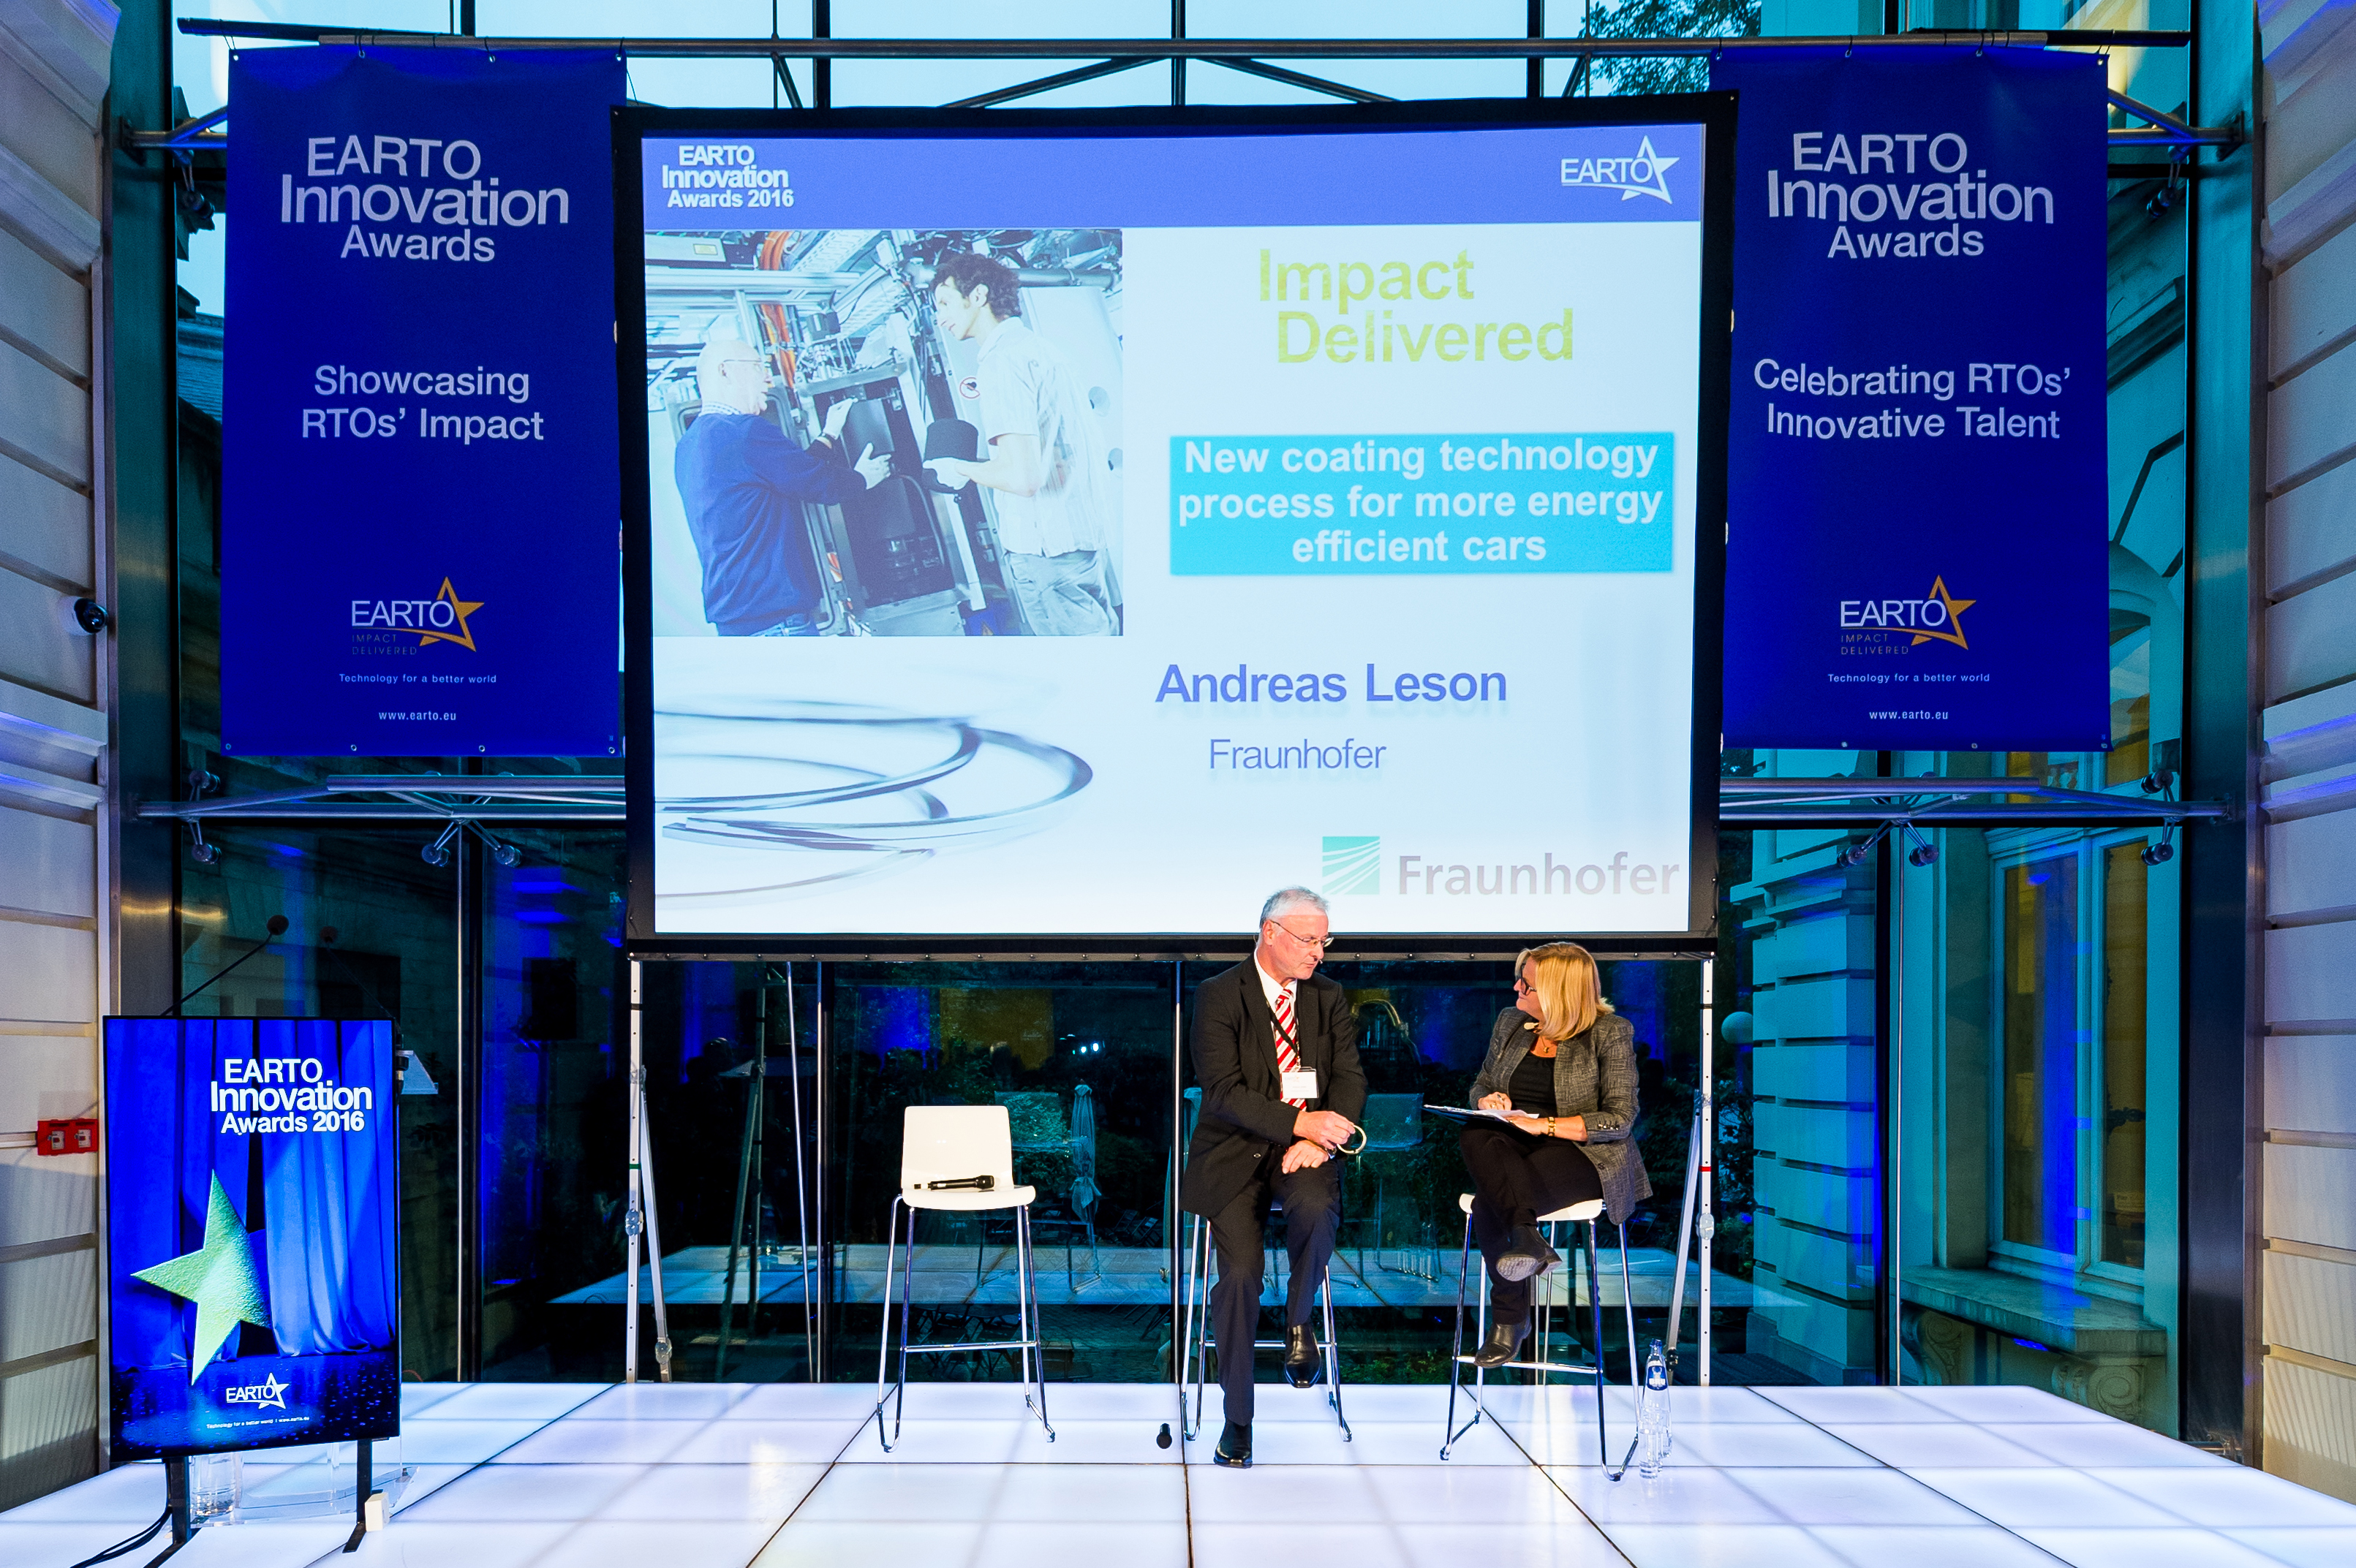 EARTO Innovation Awards Ceremony on October 12, 2016 in Brussels